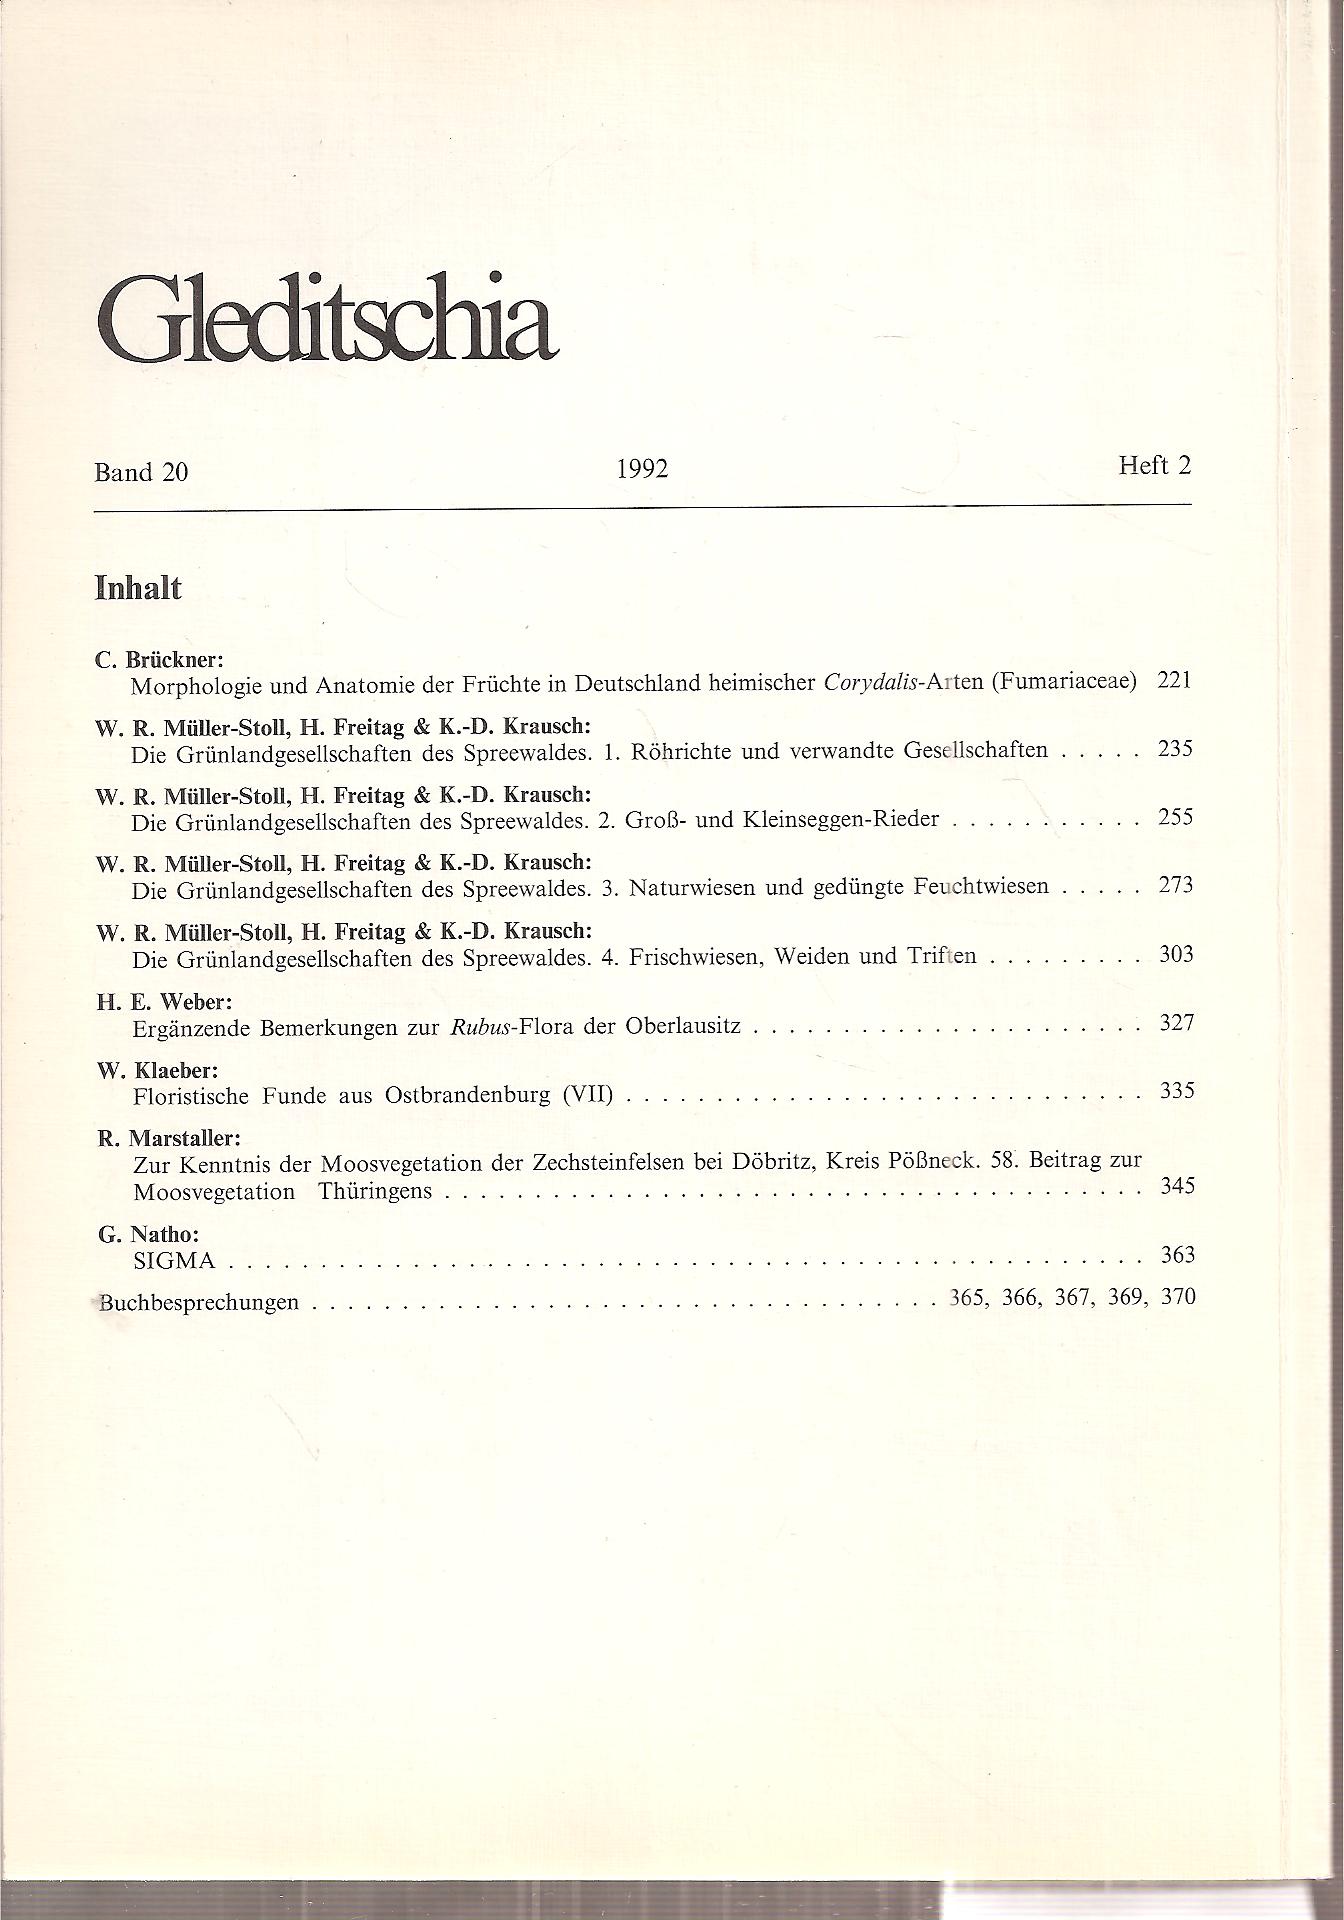 Gleditschia  Gleditschia Band 20, Heft 2, 1992 